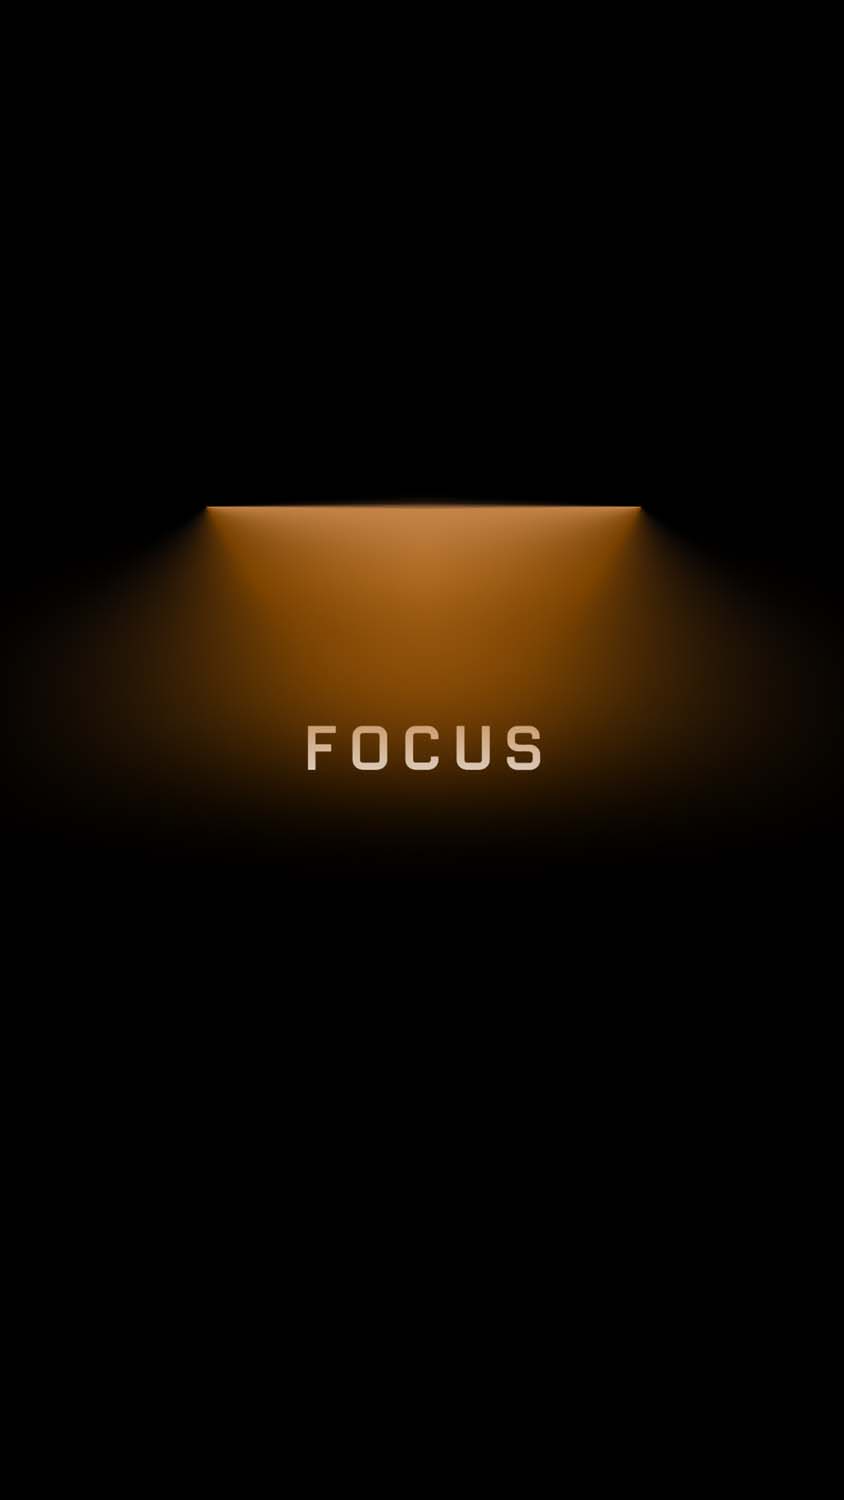 Focus Light